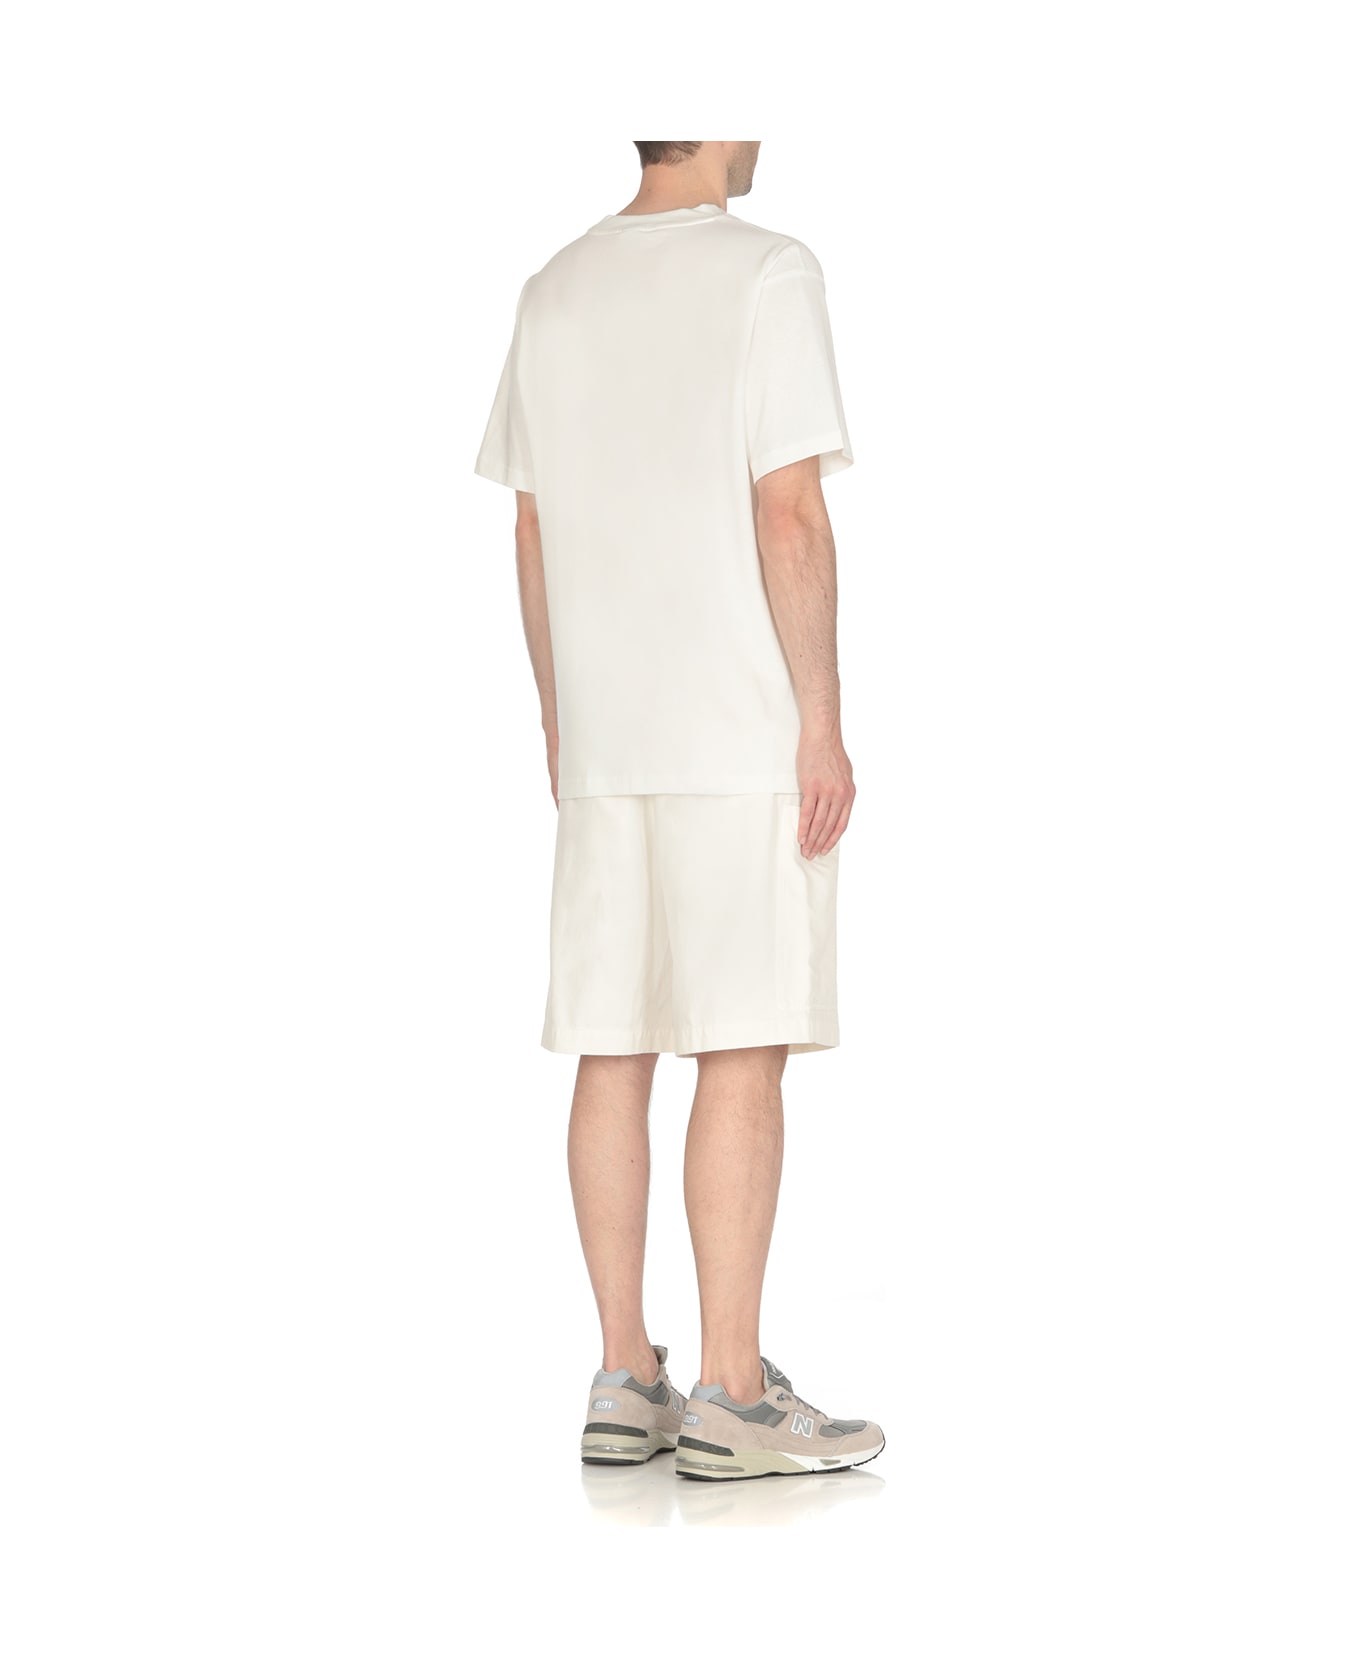 New Balance Athletics Basketball T-shirt - White シャツ